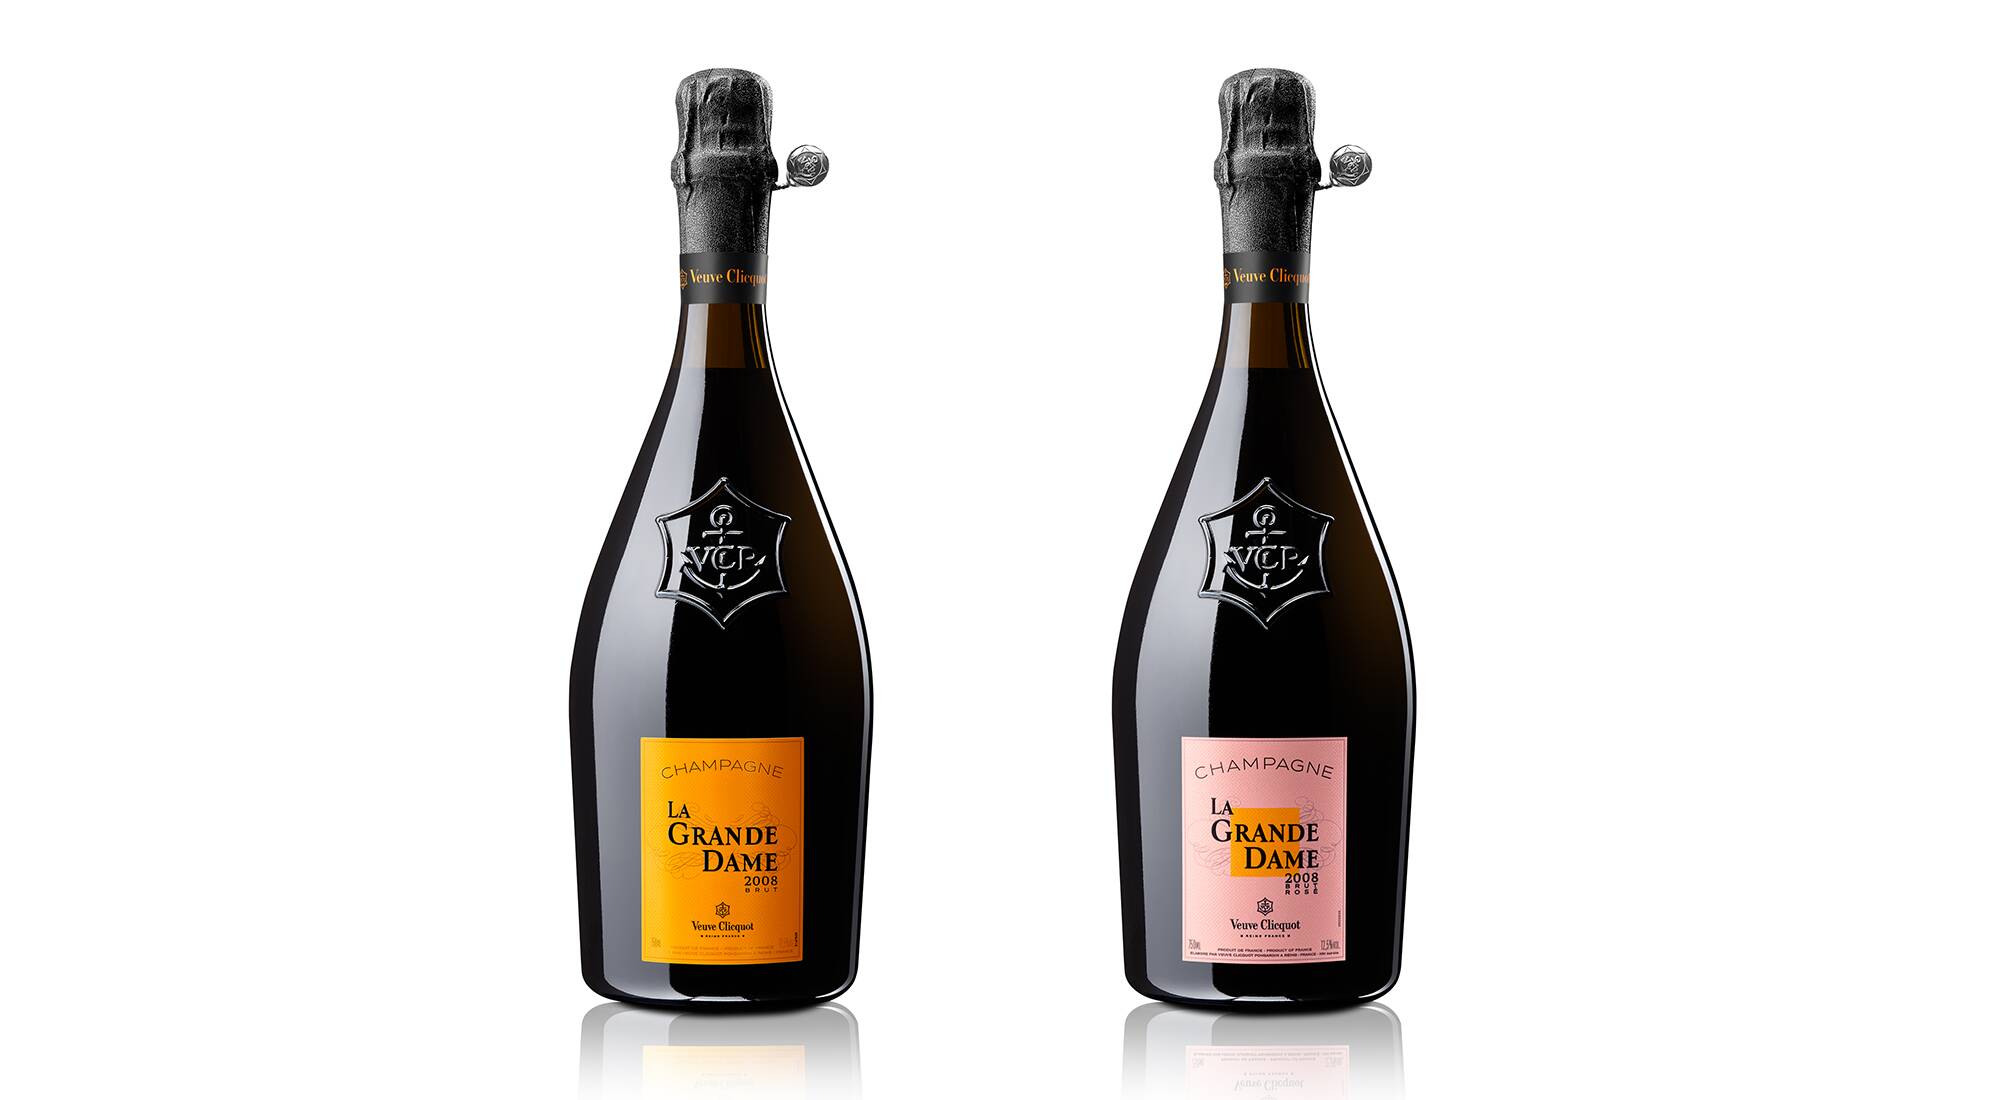 Veuve Clicquot unveils La Grande Dame 2008, a new vintage in the